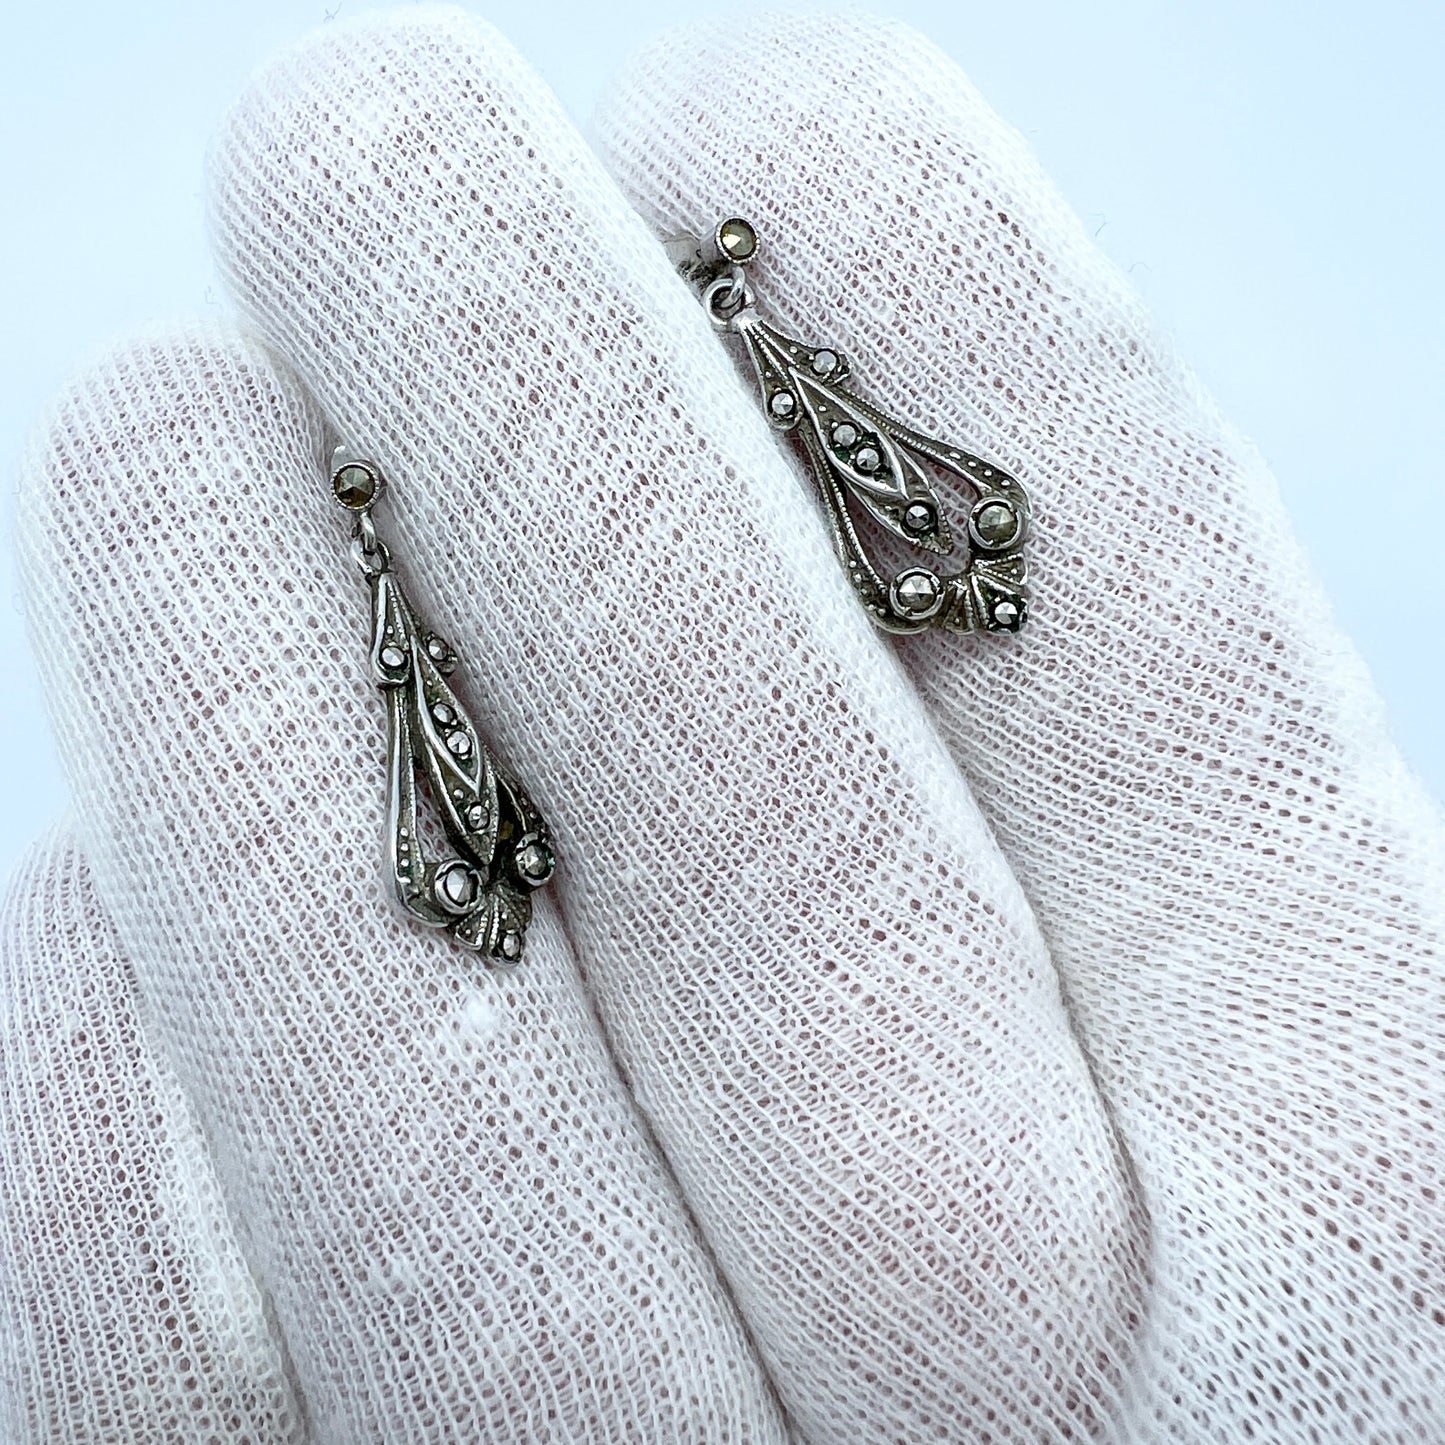 Vintage 1930-40s. Solid 835 Silver Marcasite Earrings.